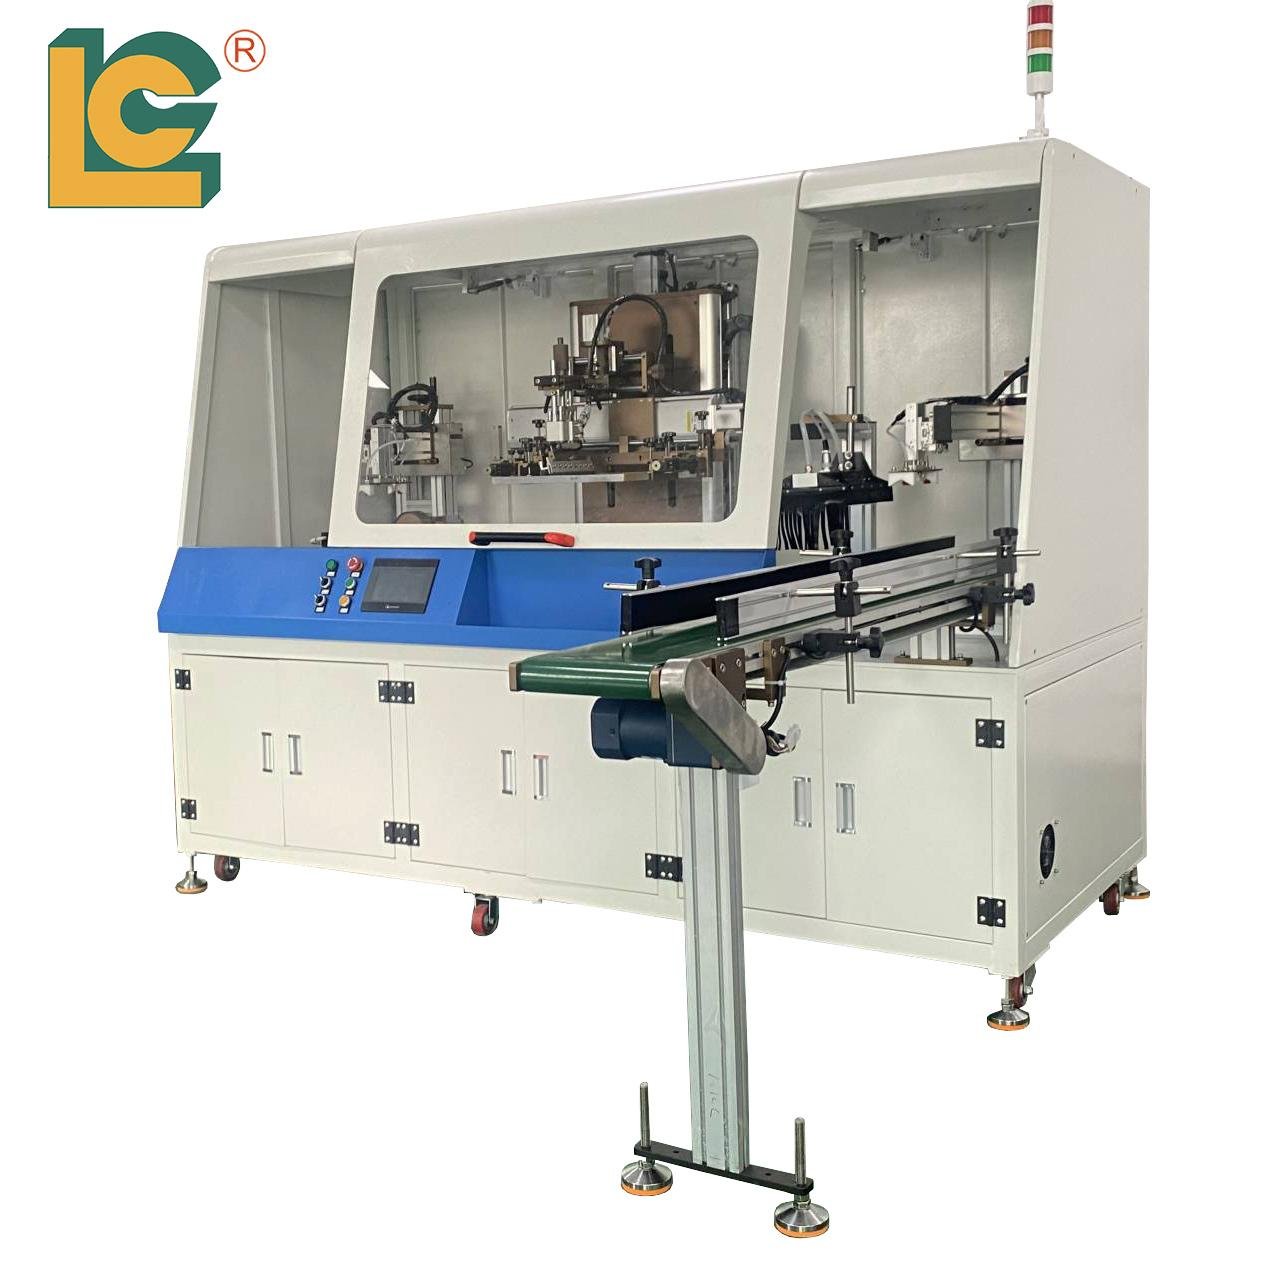 Filter monochrome automatic screen printing machine 3